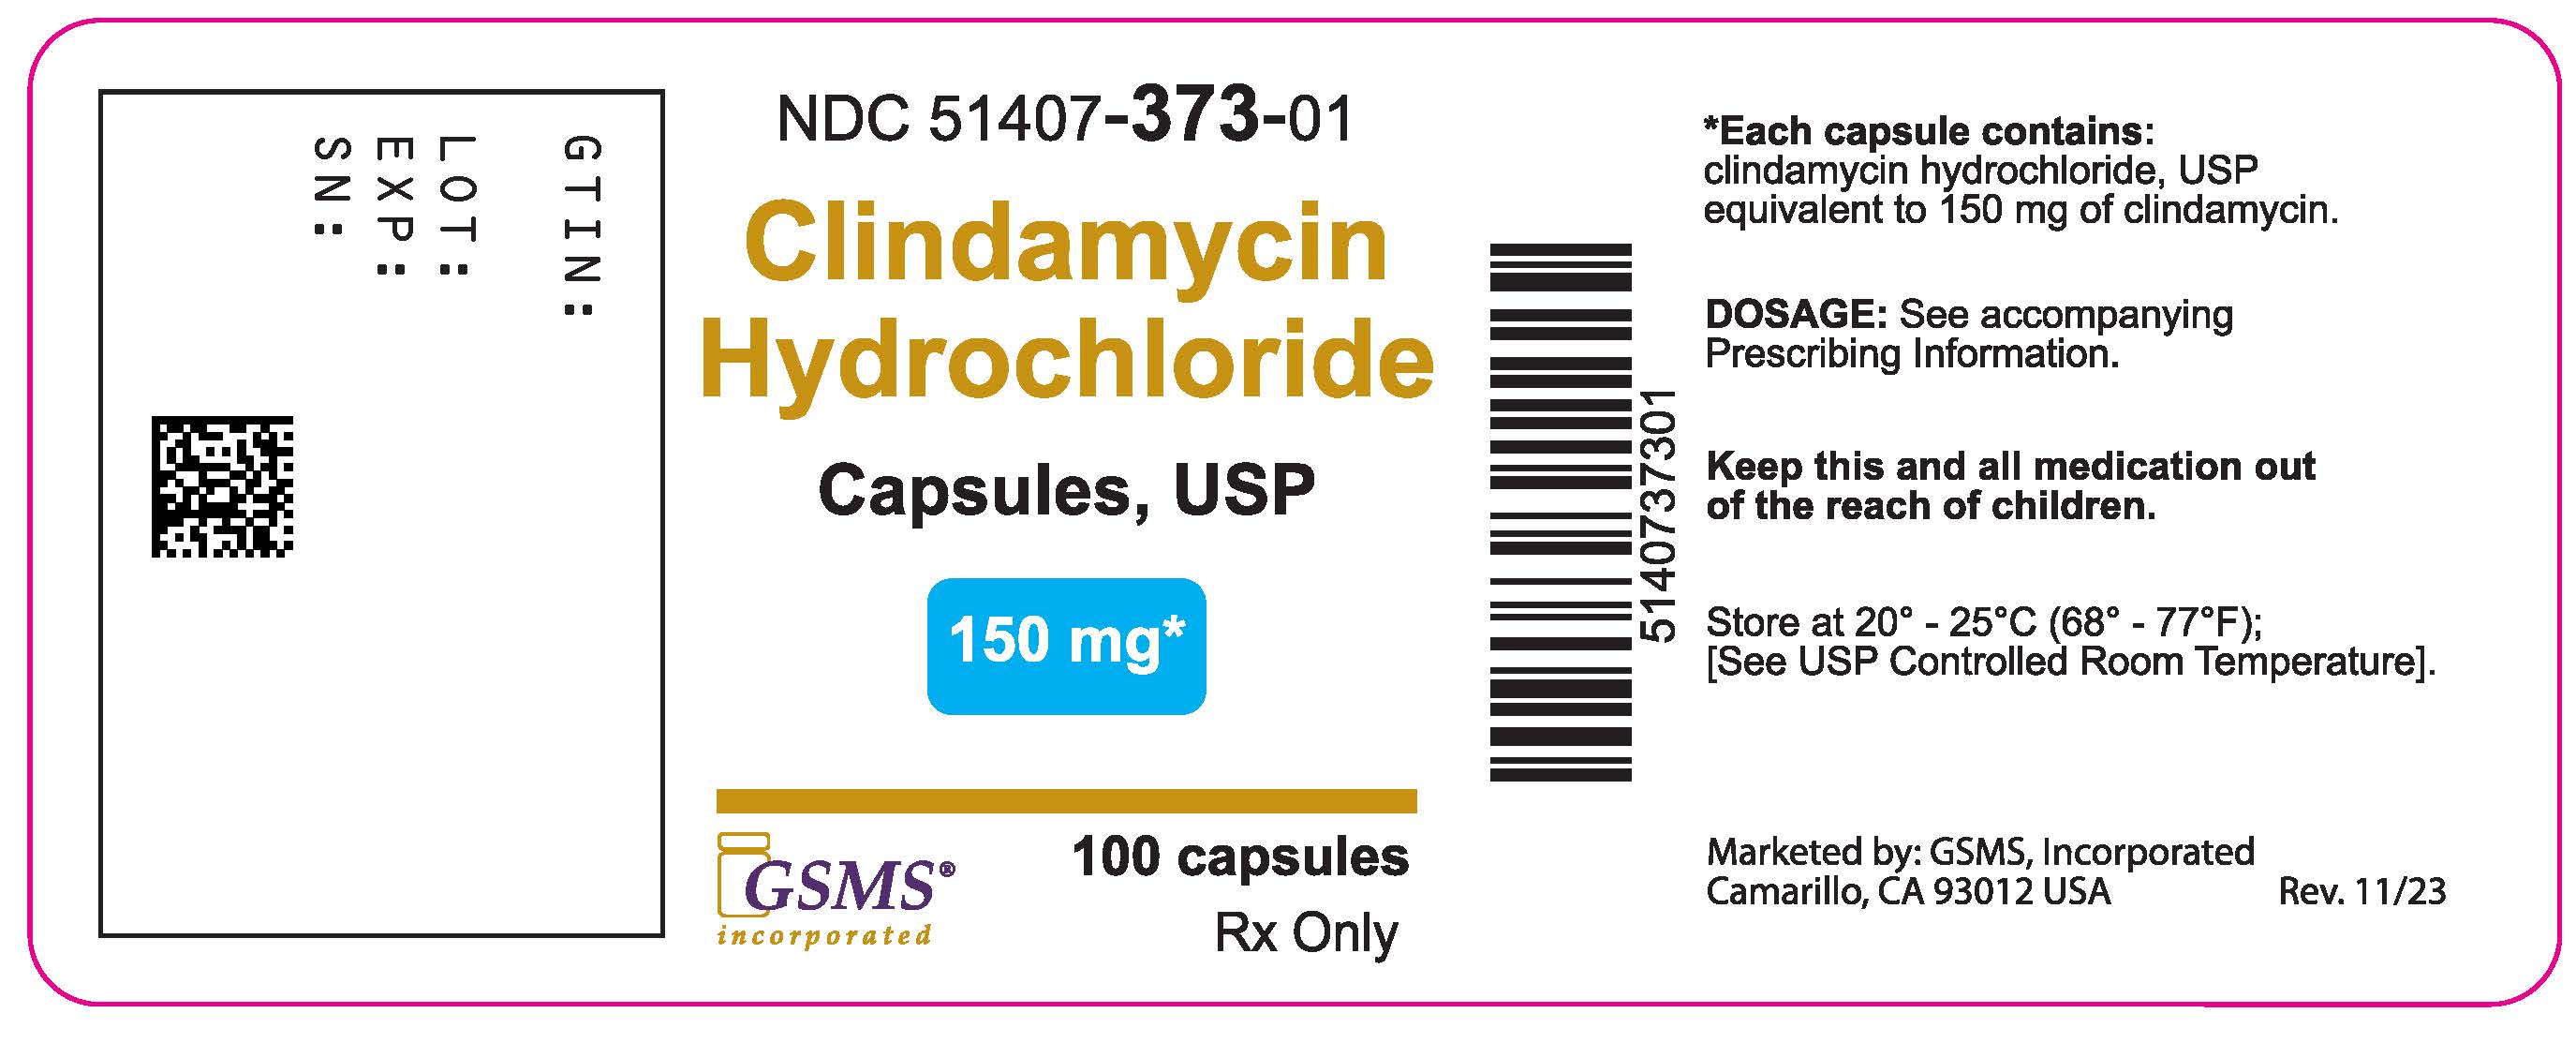 51407-373-01LB - Clindamycin HCl Capsules - Rev. 1123.jpg